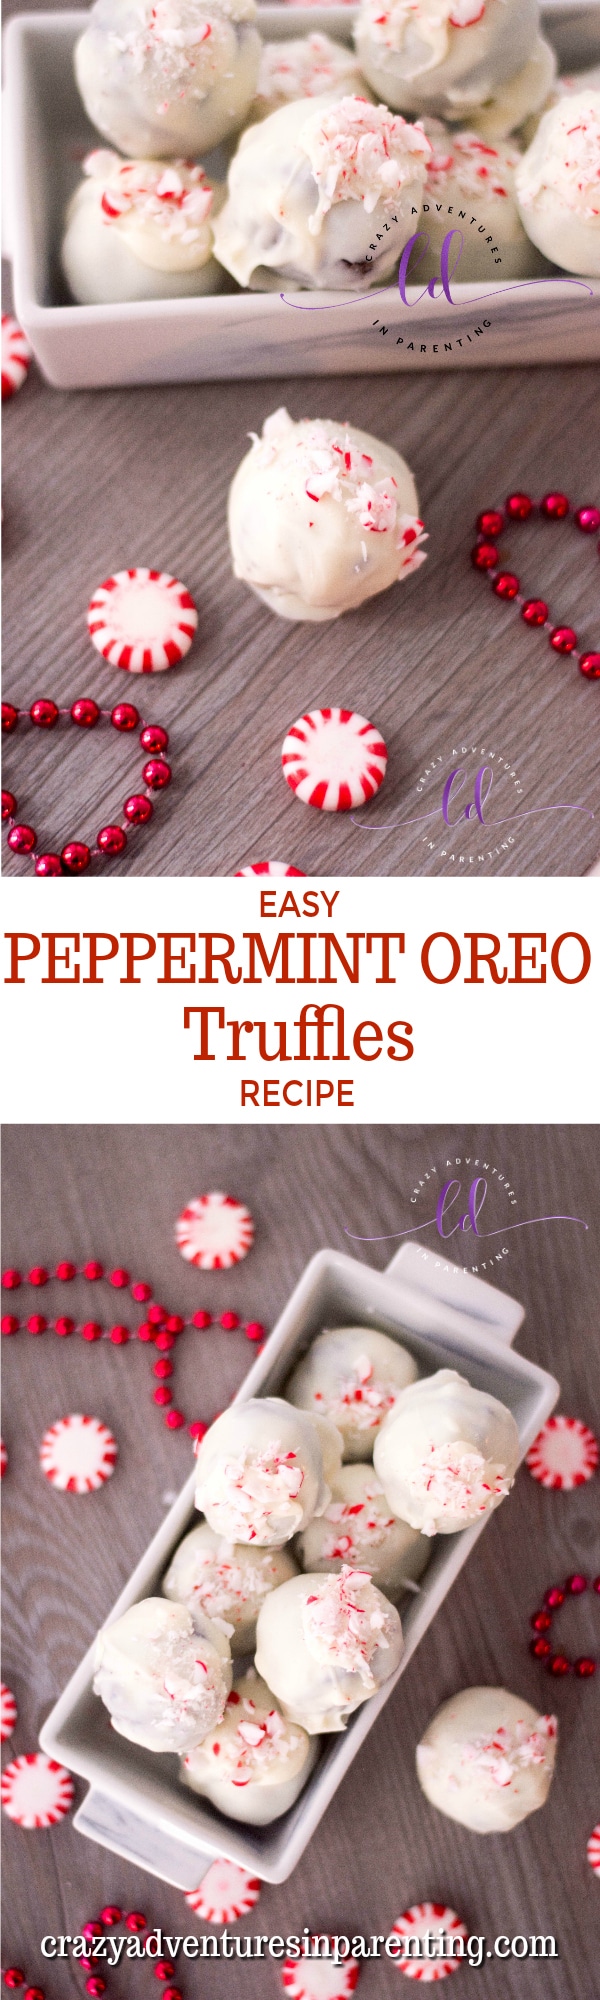 Easy Peppermint Oreo Truffles Recipe